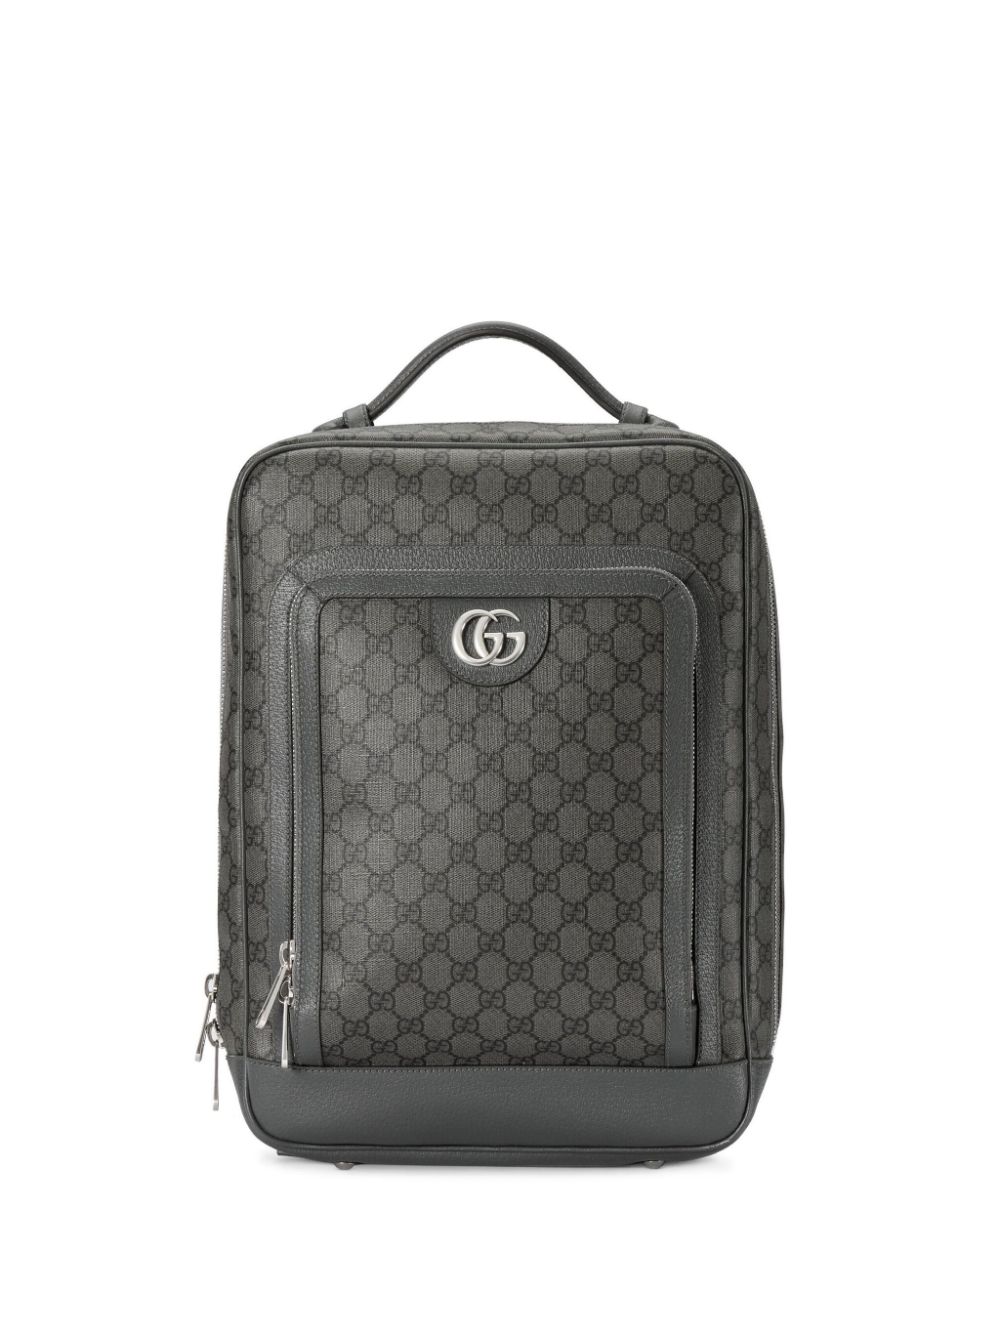 Gucci medium Ophidia backpack - Grey von Gucci